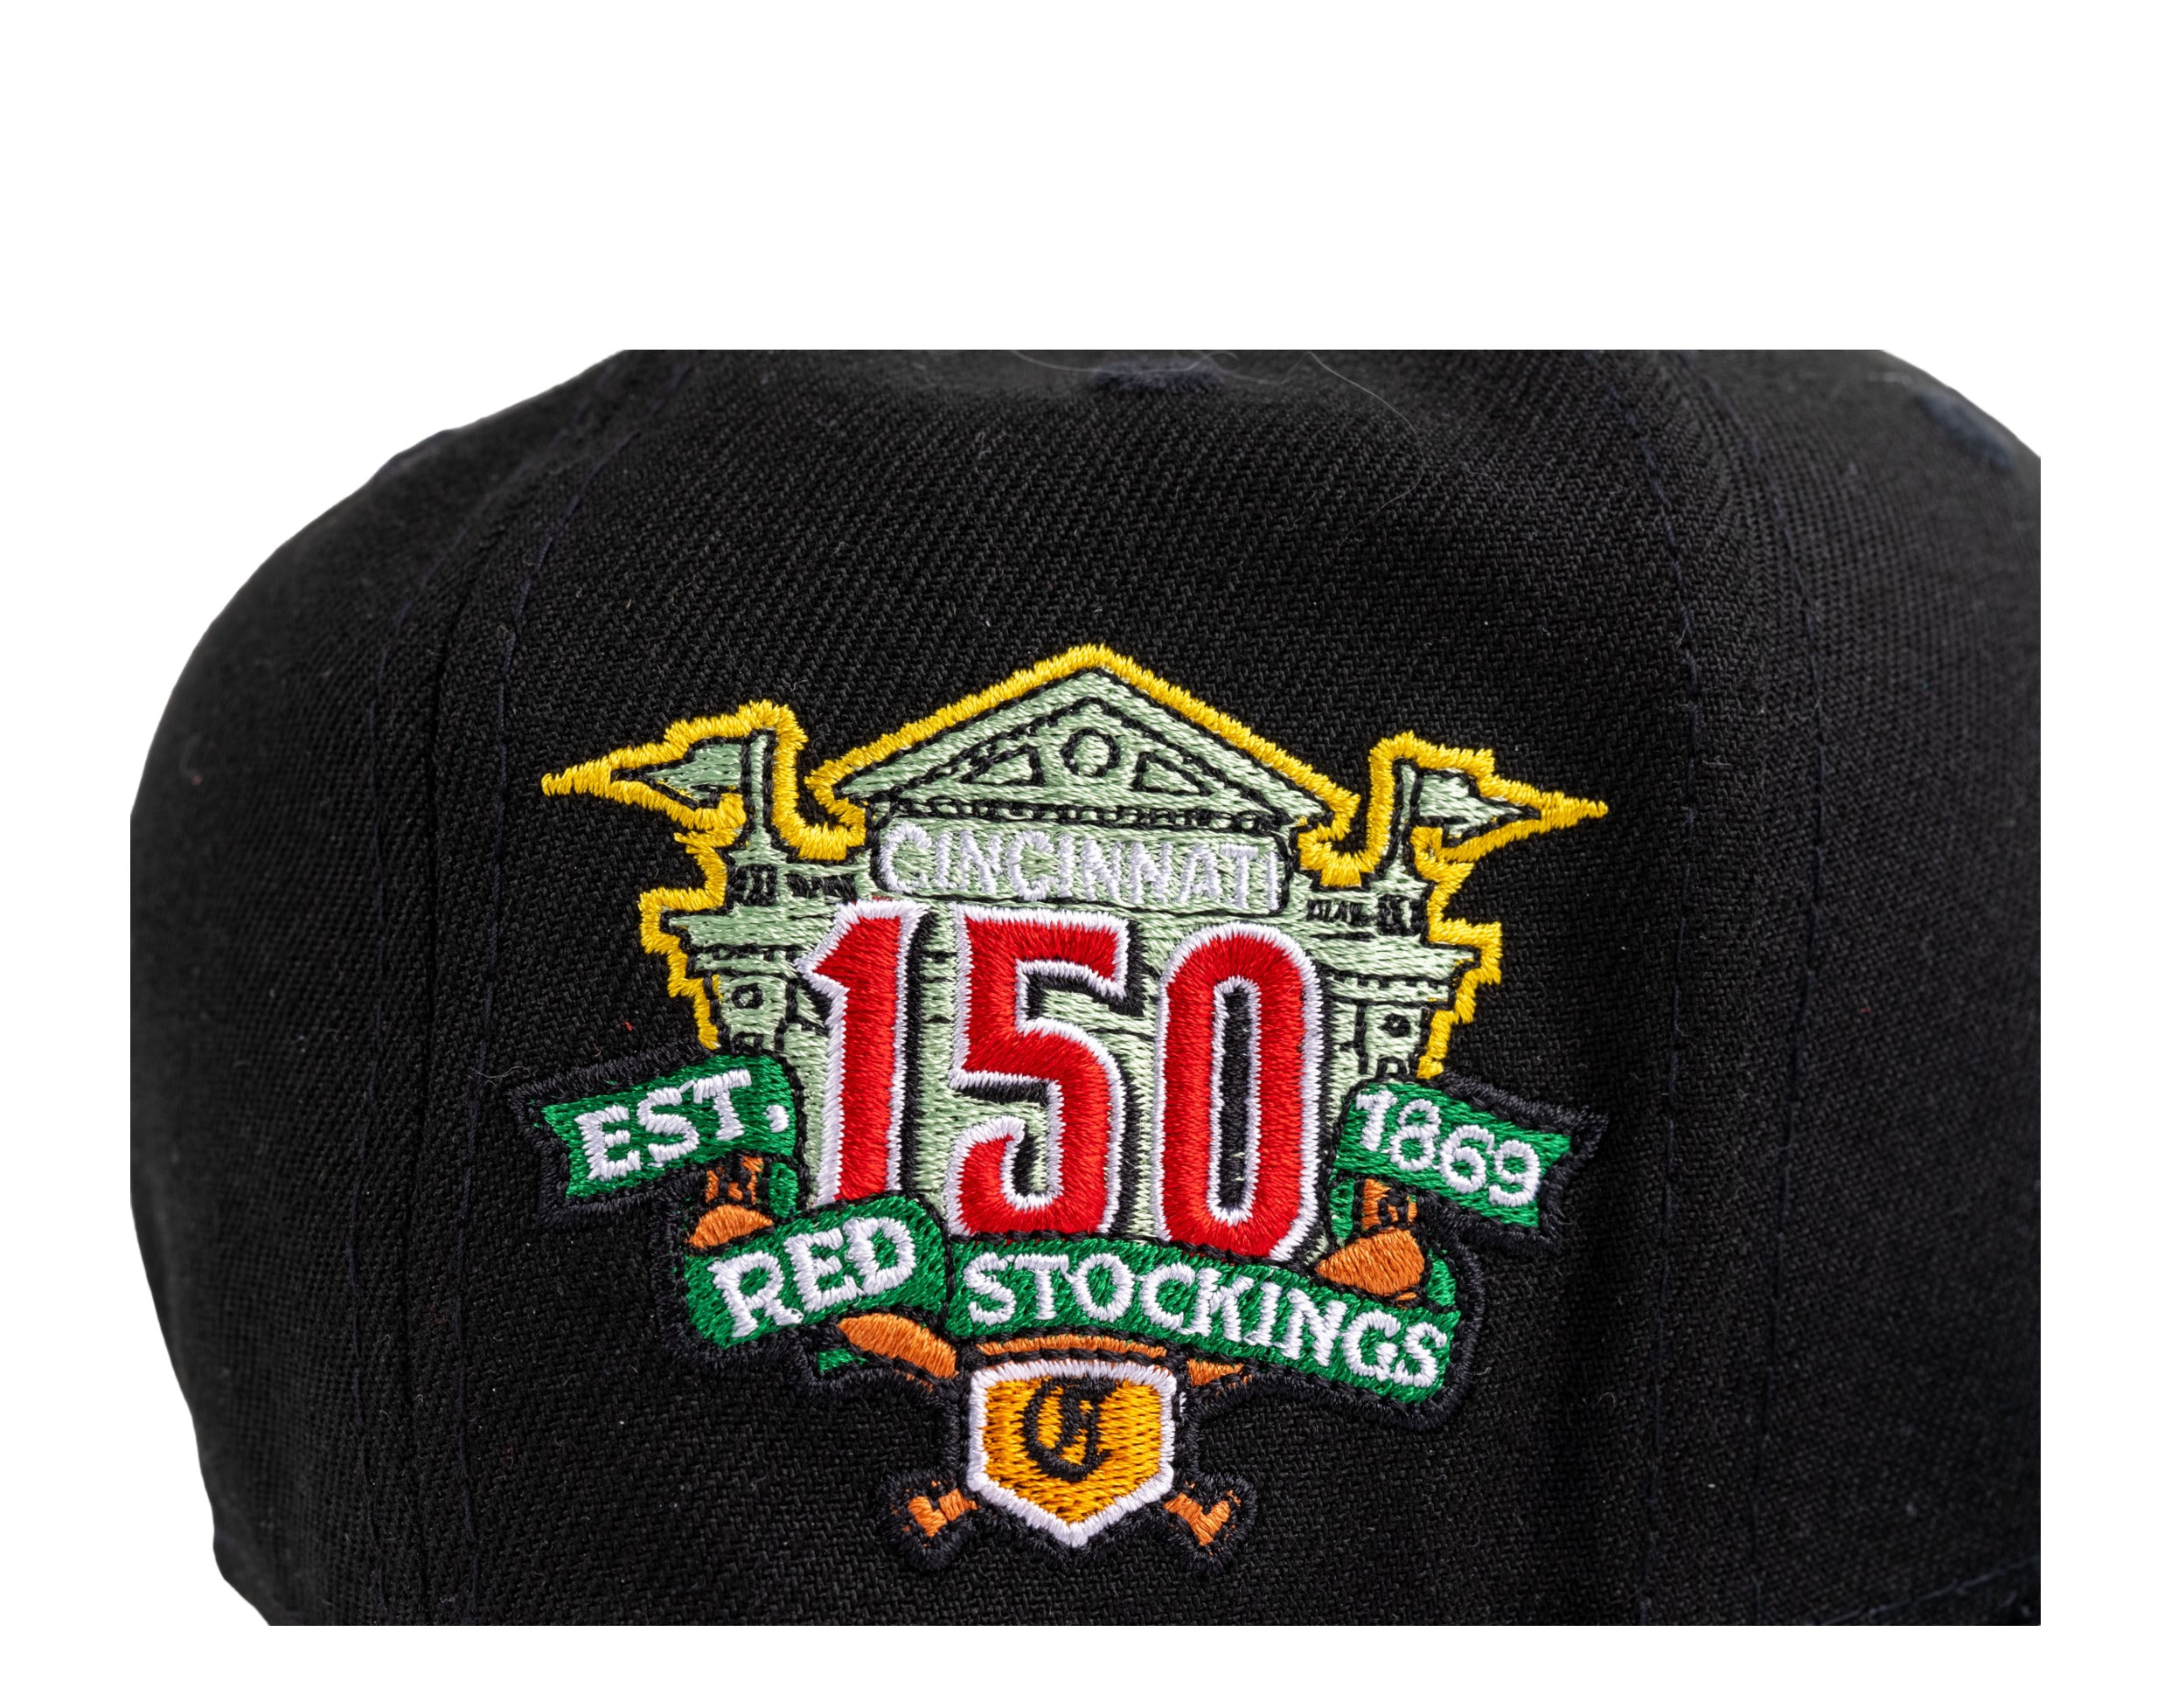 Red Cincinnati Reds Green Bottom 150th Anniversary side Patch New